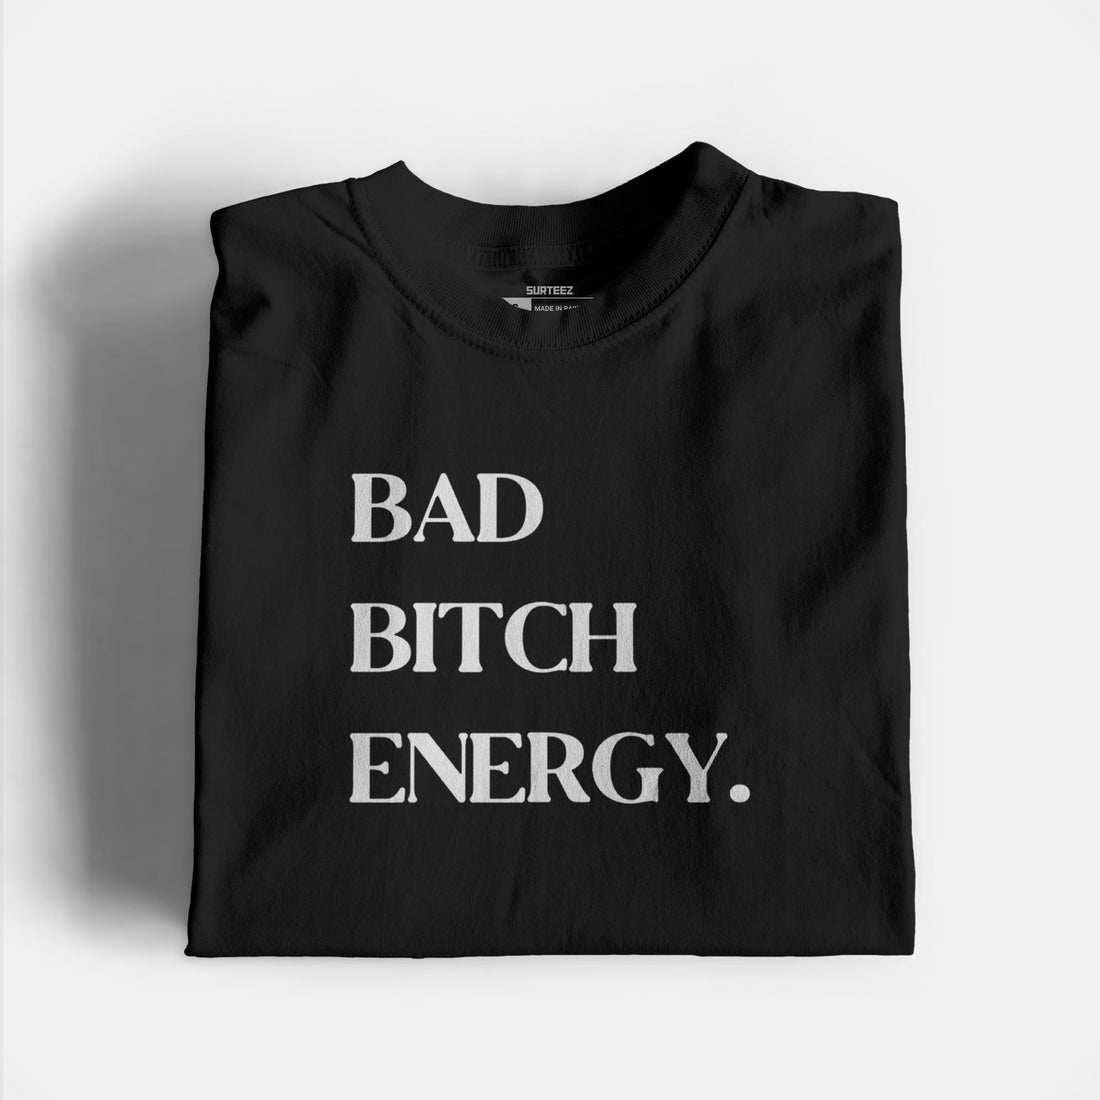 Bad Bitch Energy Graphic Tee